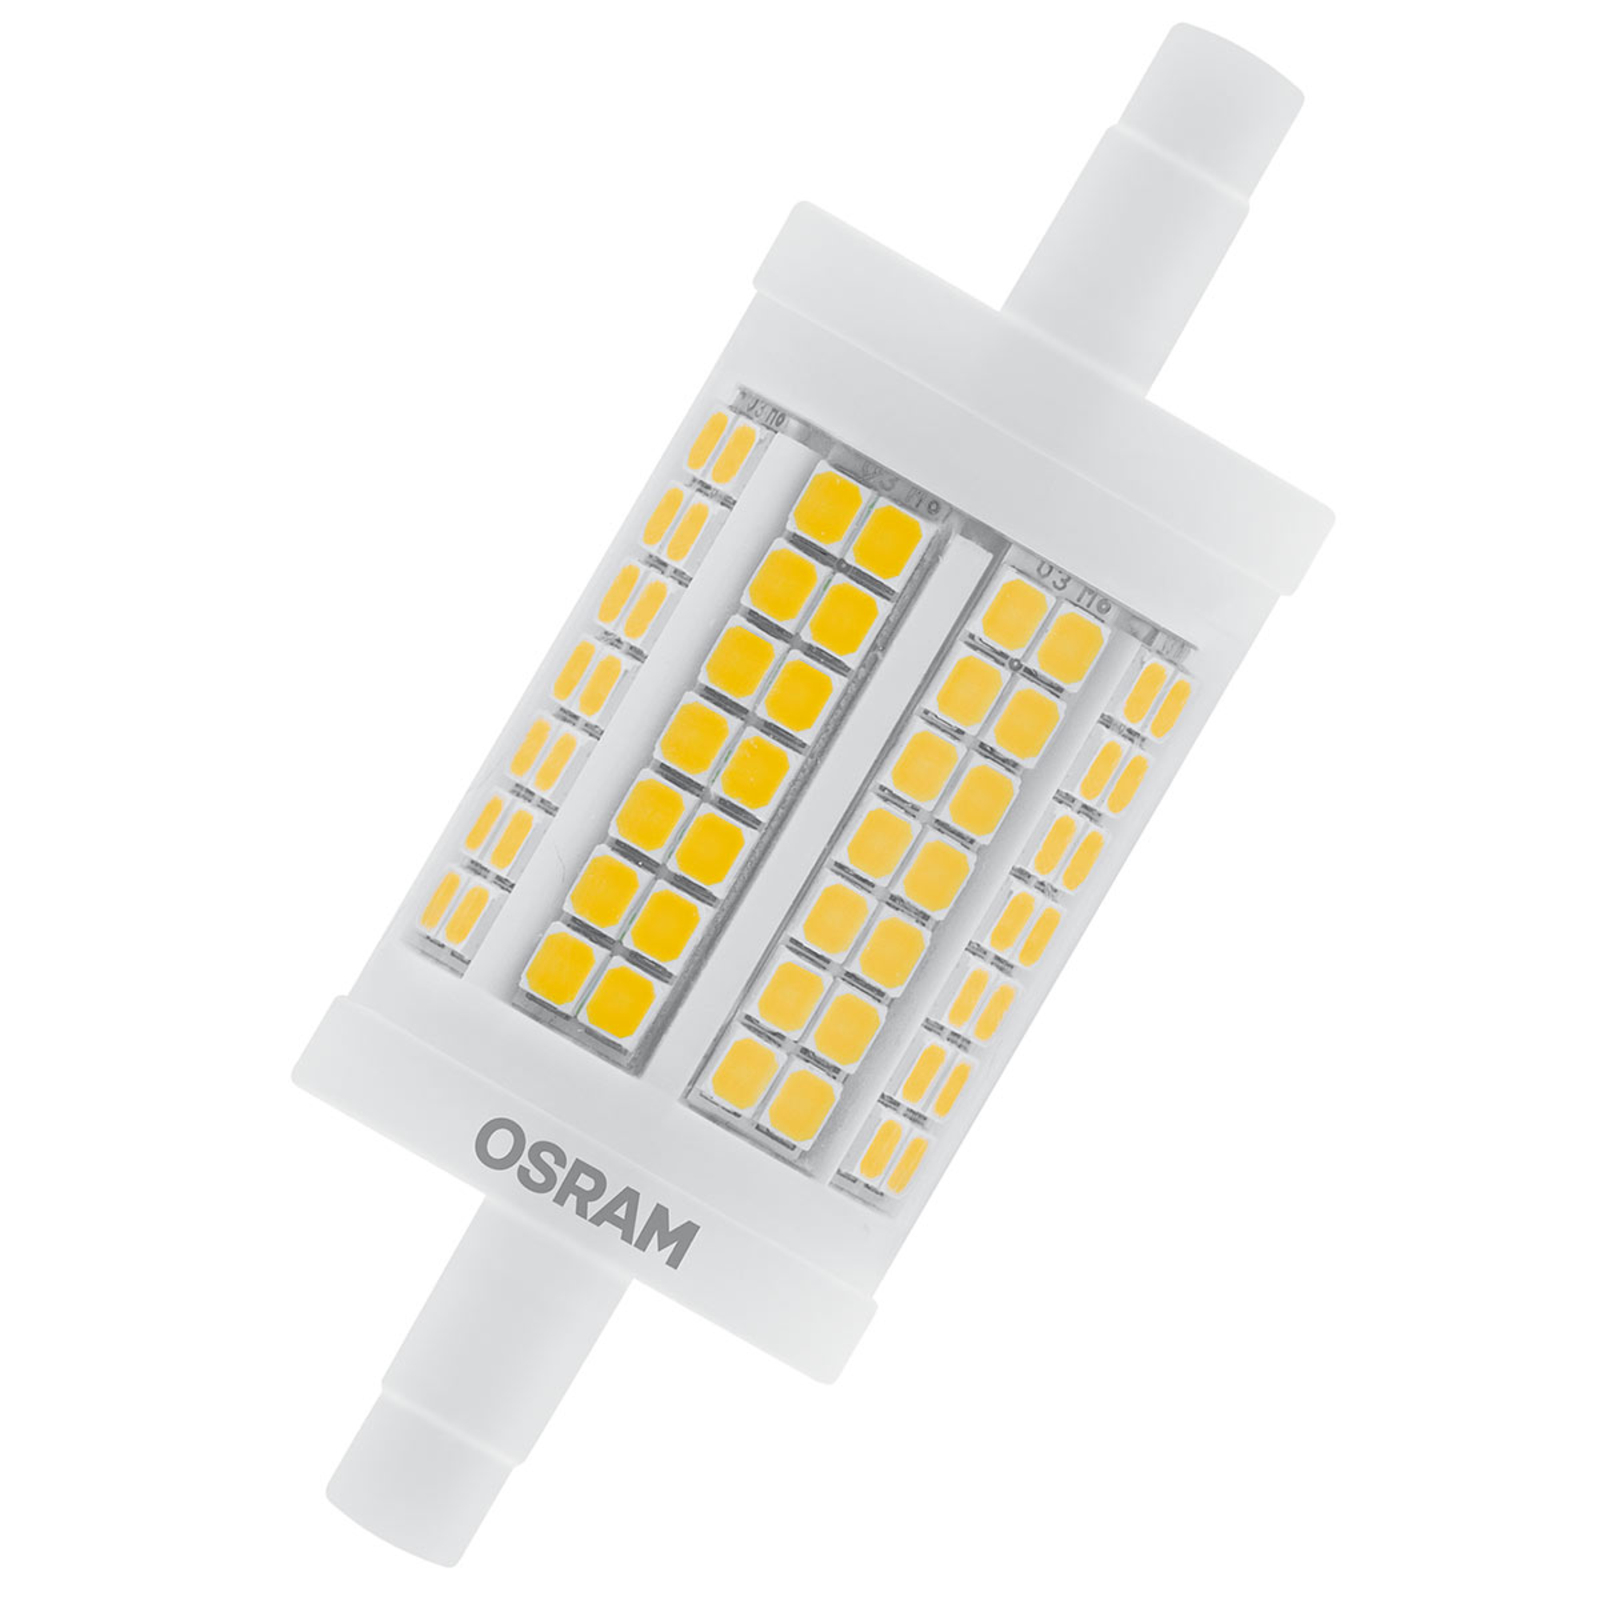 OSRAM LED-stav R7s 12 W varmhvit 1 521 lm